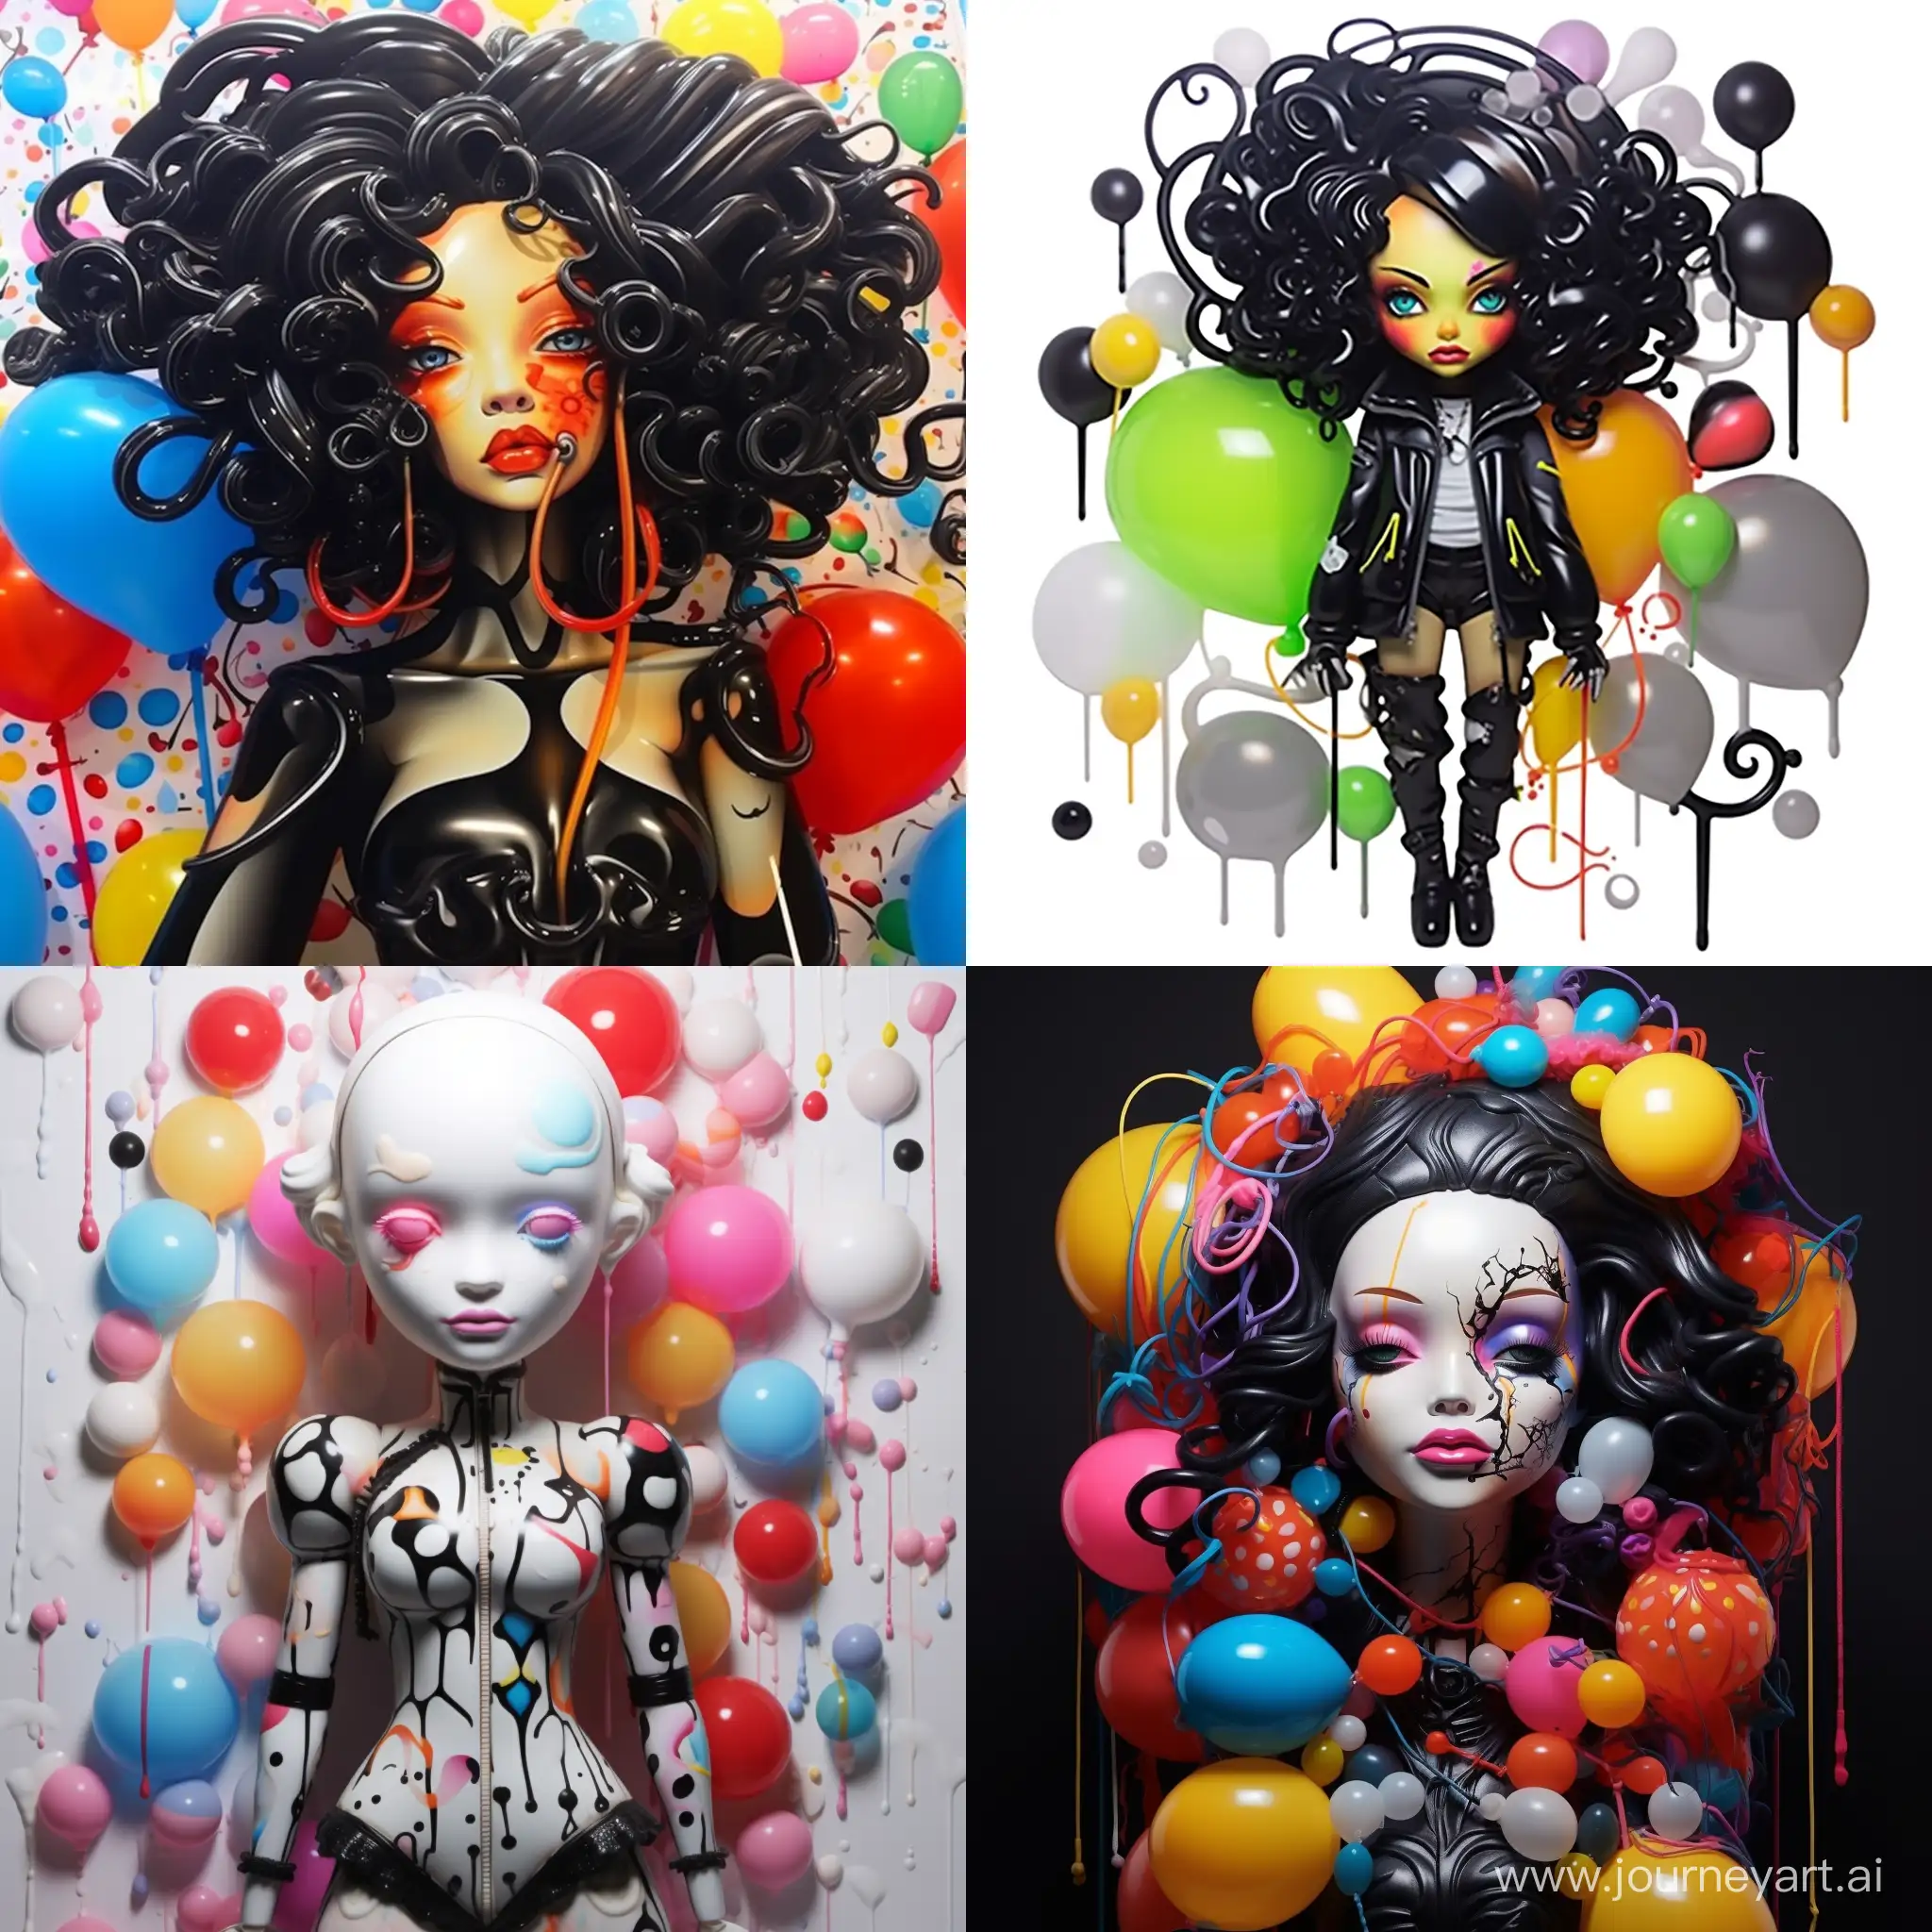 Vibrant-Popmart-Figure-Graffiti-Scene-with-Neon-Dolls-and-Balloons